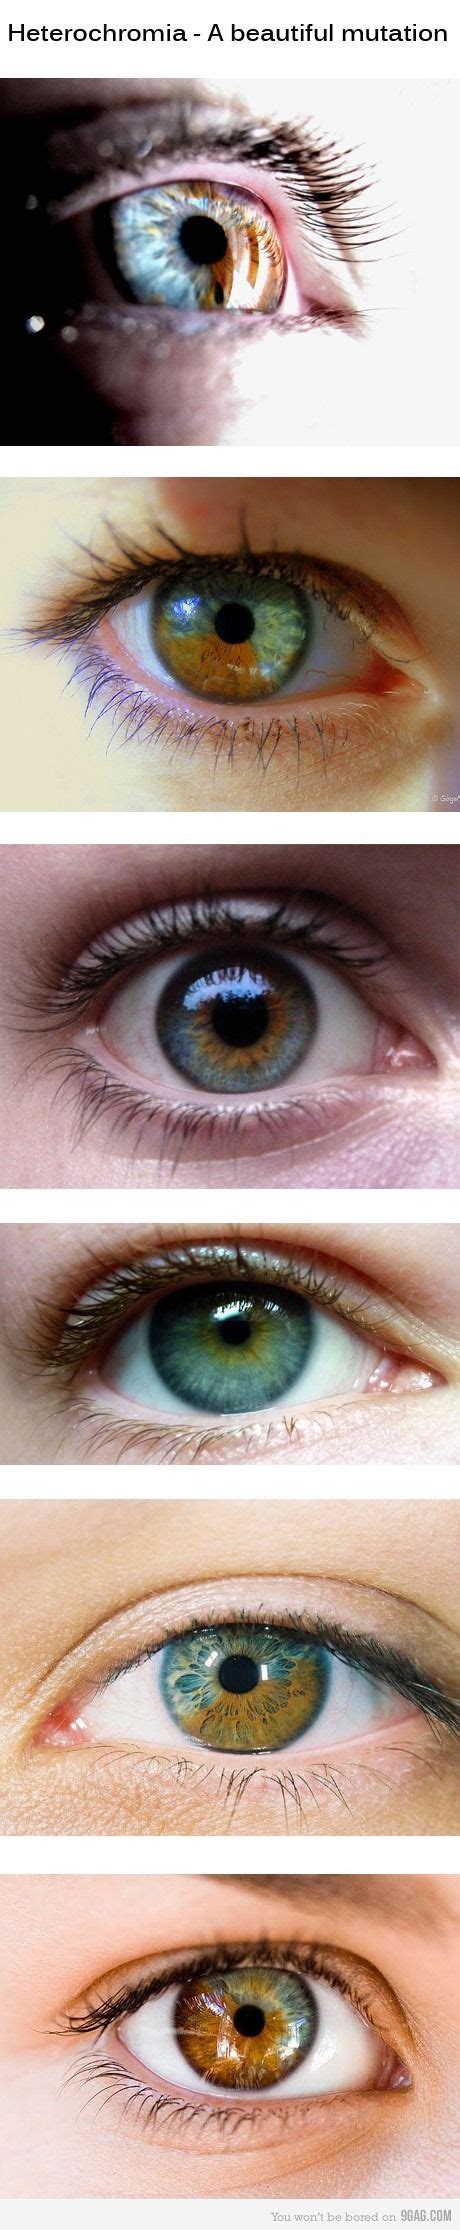 Heterochromia A Beautiful Mutation Of The Iris Pretty Eyes Cool Eyes Beautiful Eyes